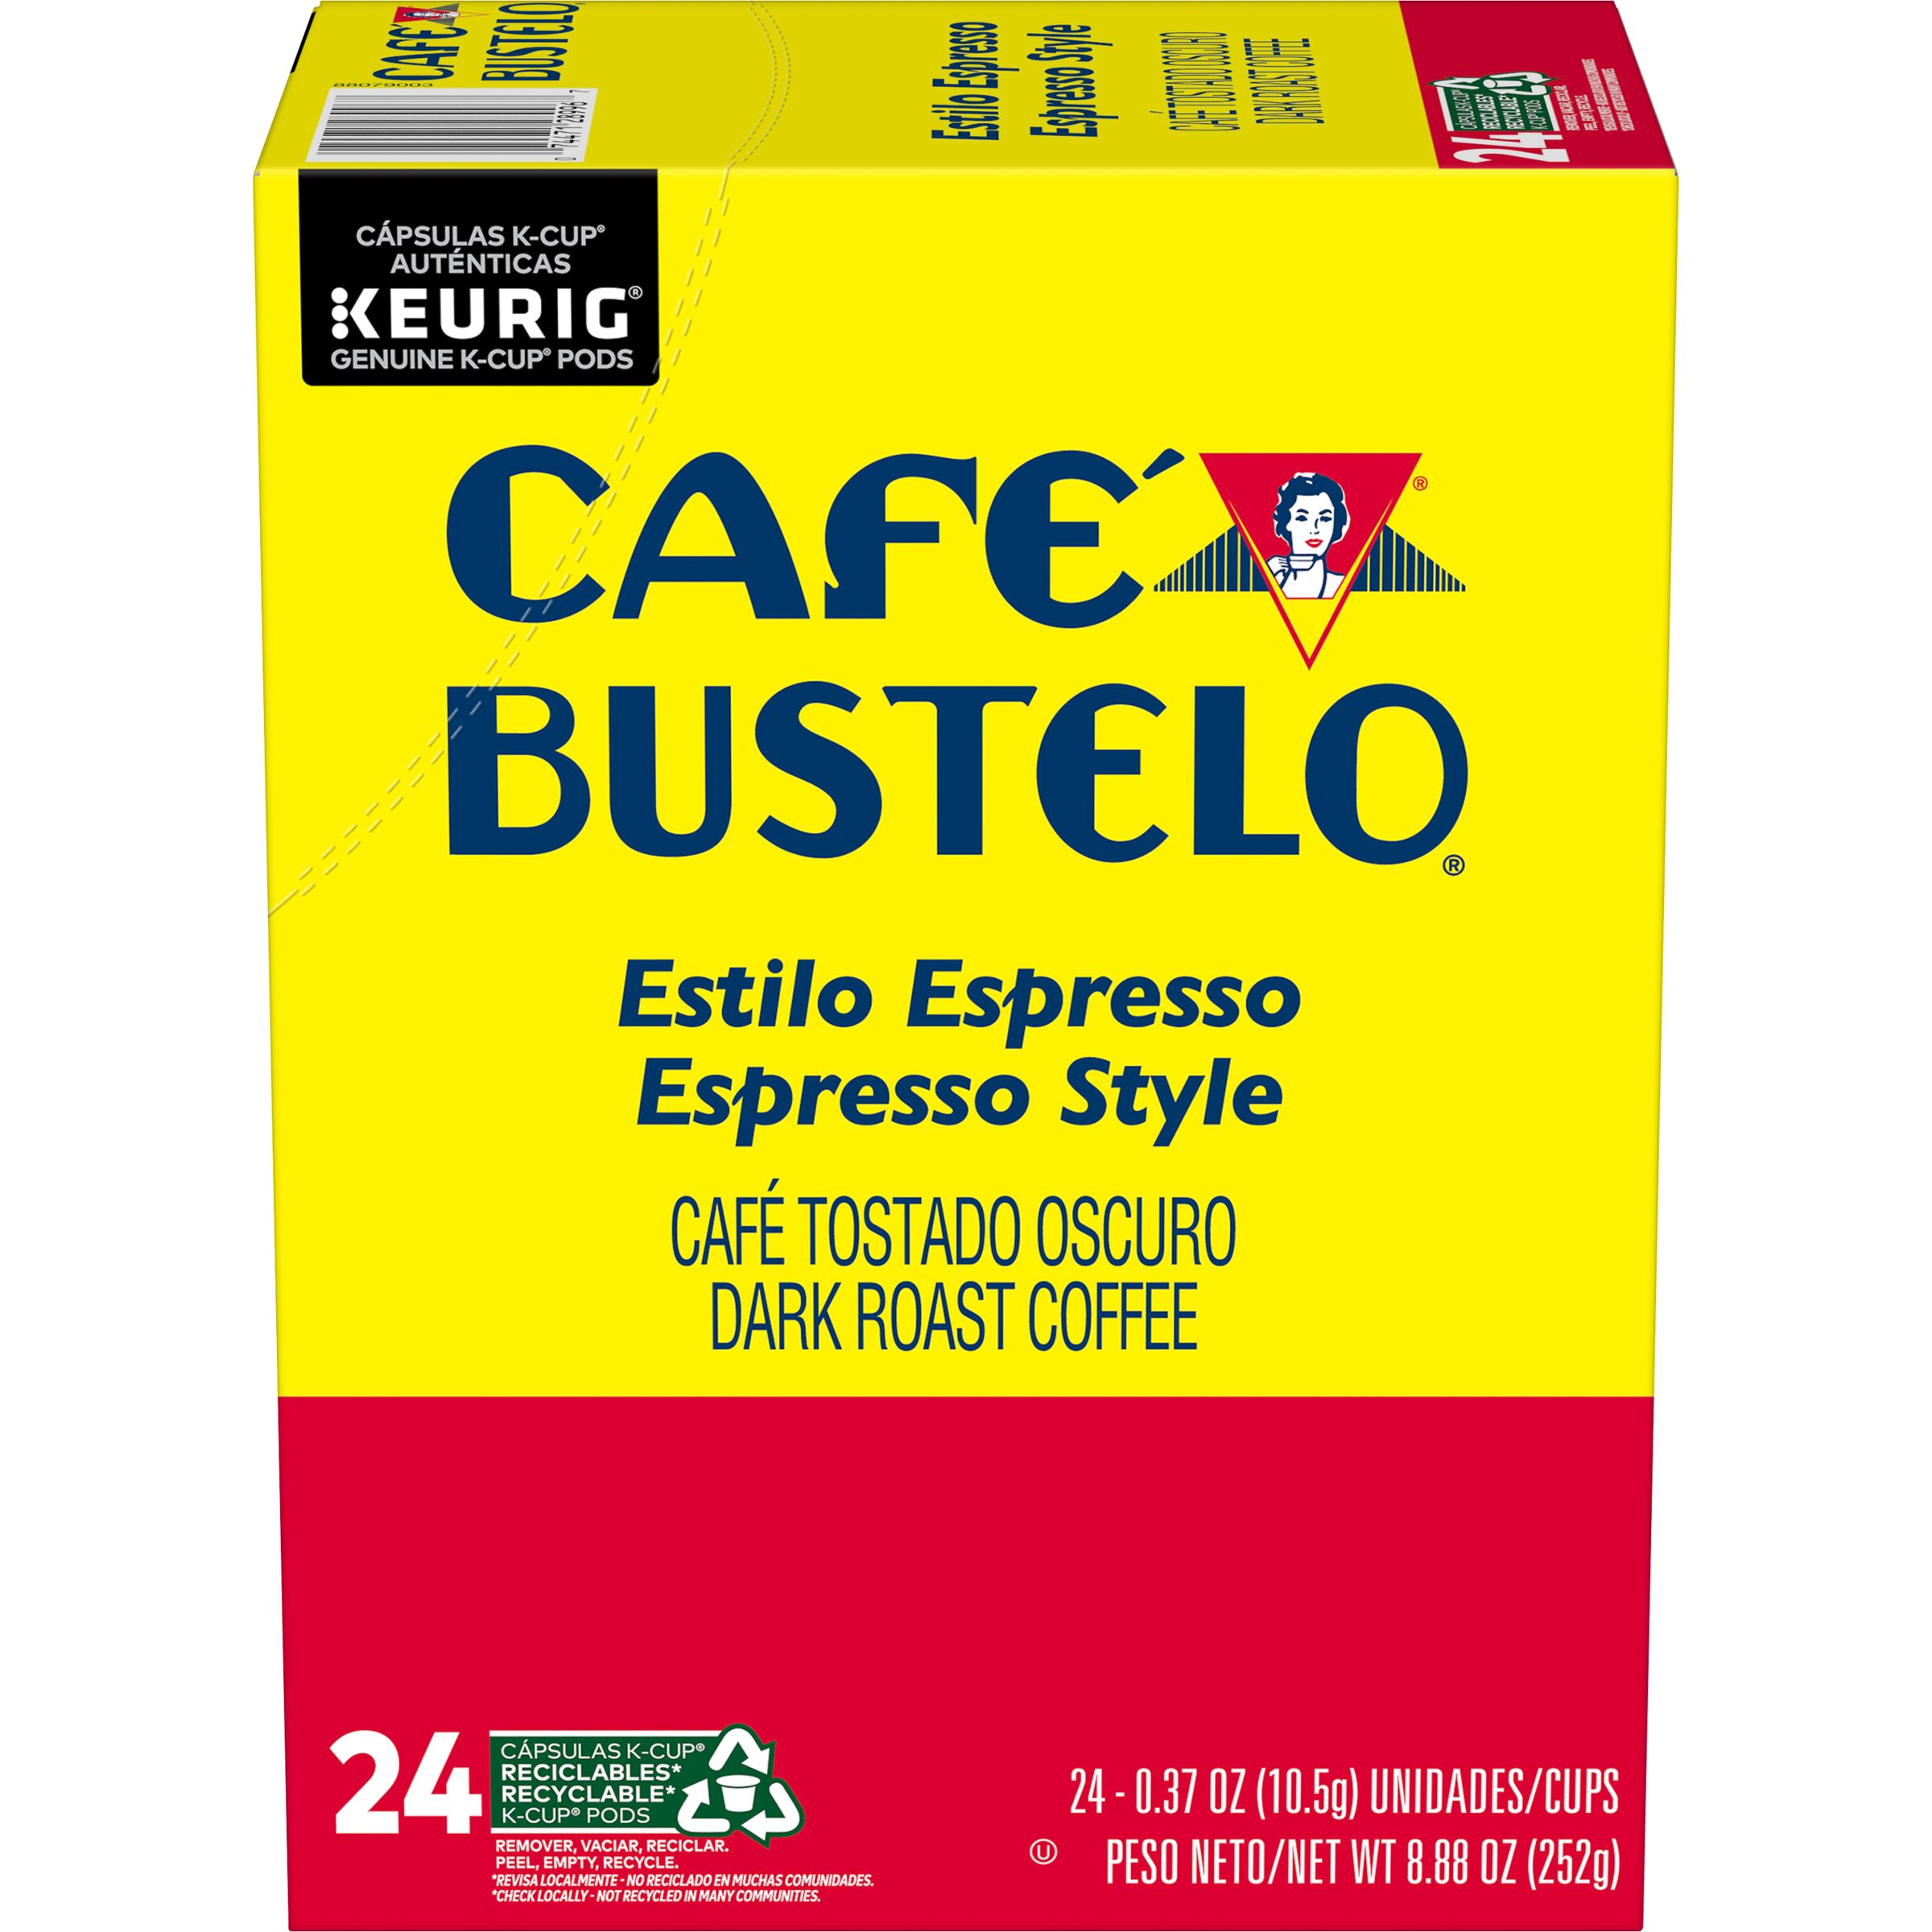 Caf Bustelo Espresso Style, Dark Roast Coffee, Keurig K-Cup Pods, 24 Count Box - image 1 of 12